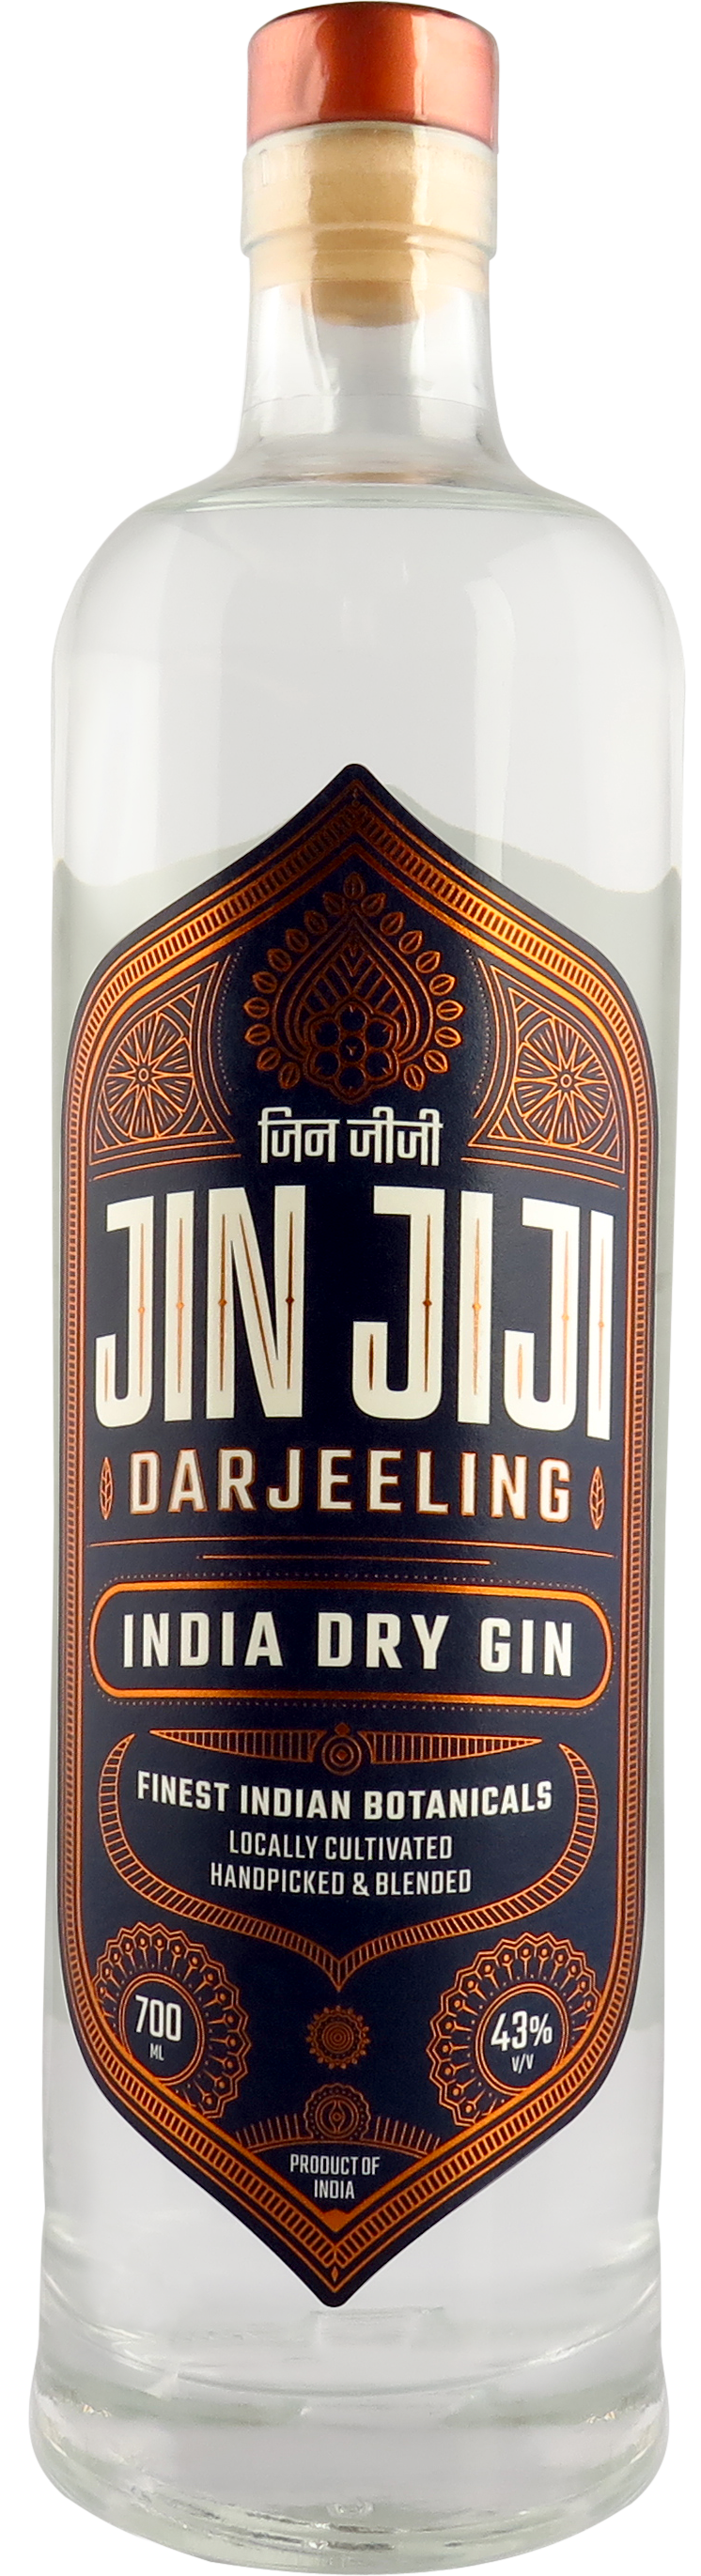 Jin JiJi Darjeeling India Dry Gin 43% 0,7l